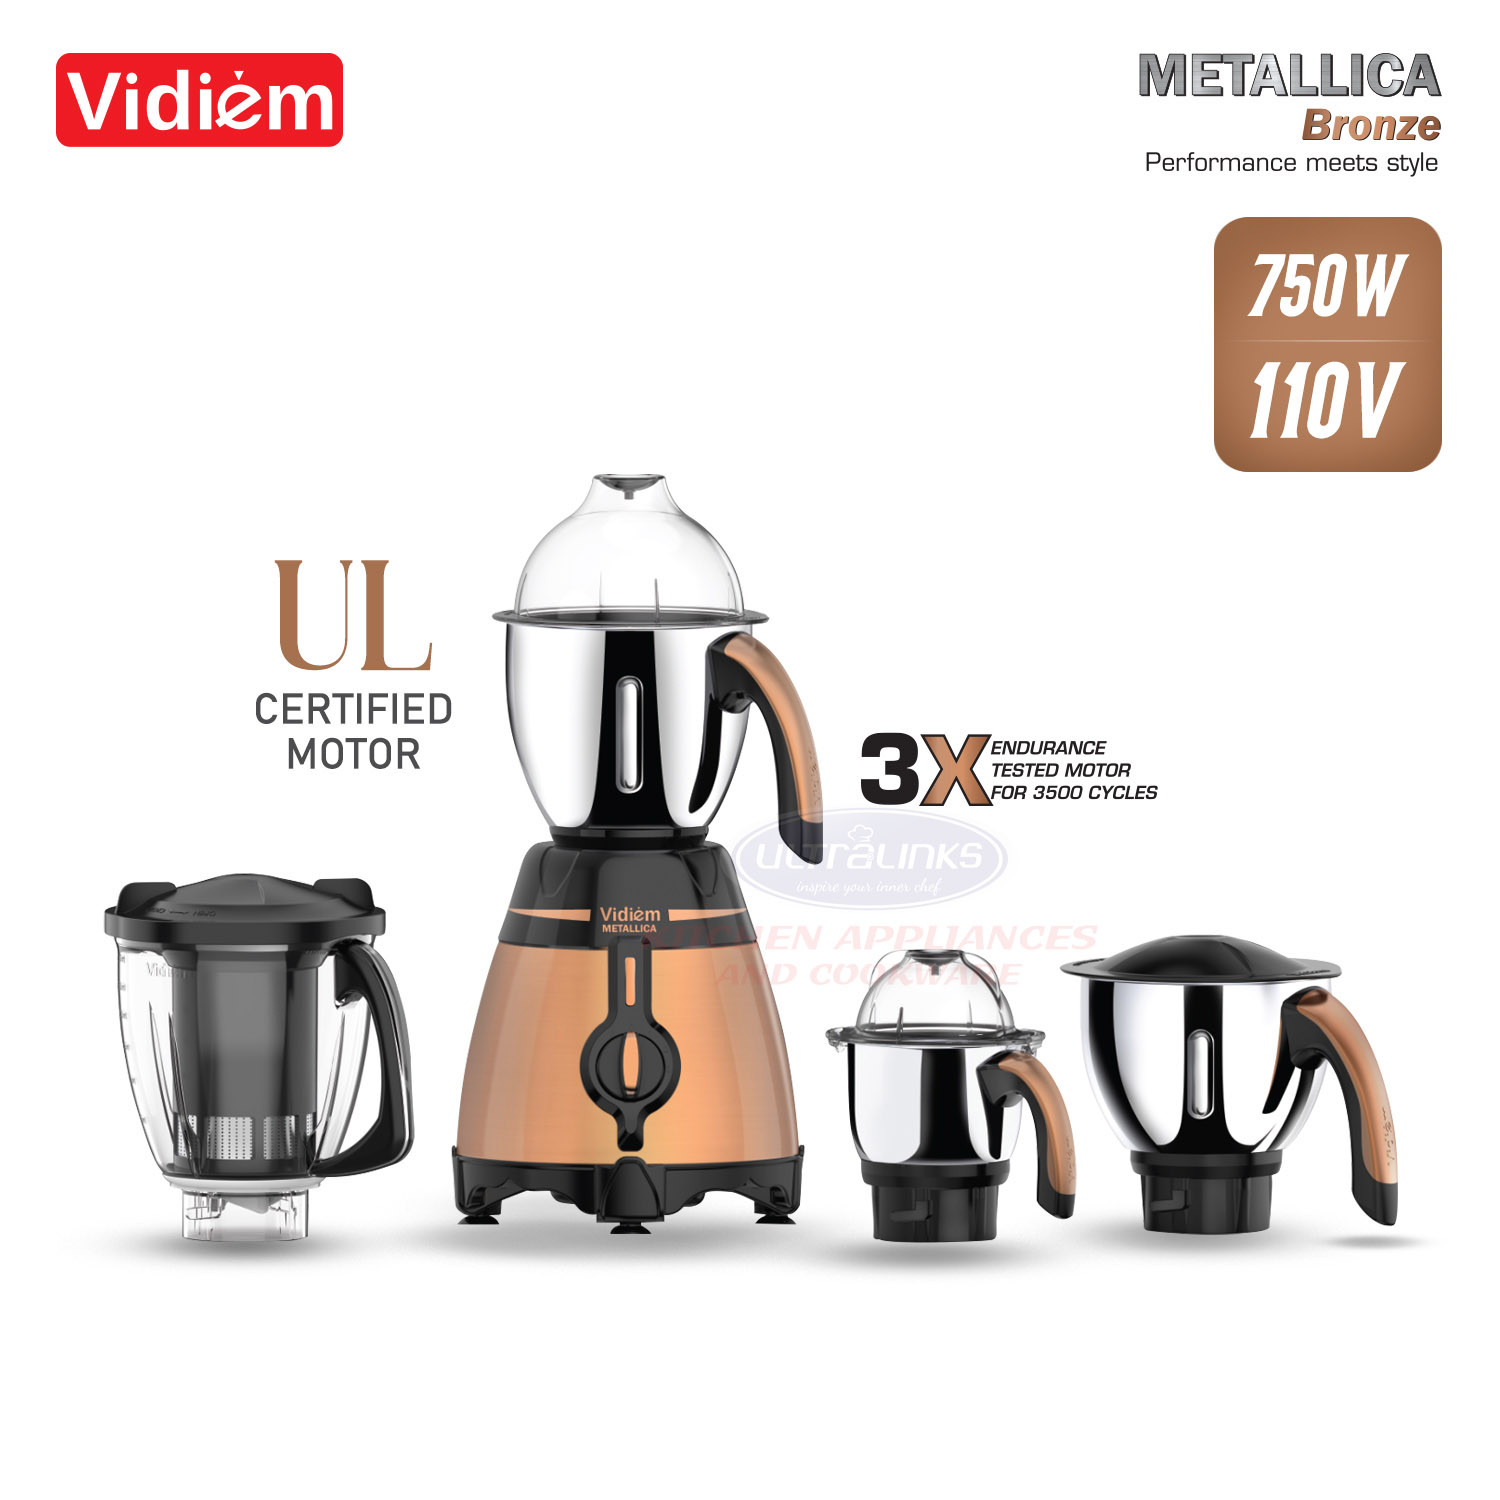 vidiem-metallica-bronze-750w-110v-stainless-steel-jars-indian-mixer-grinder-with-almond-nut-milk-spice-coffee-grinder-jar-for-use-in-canada-usa1